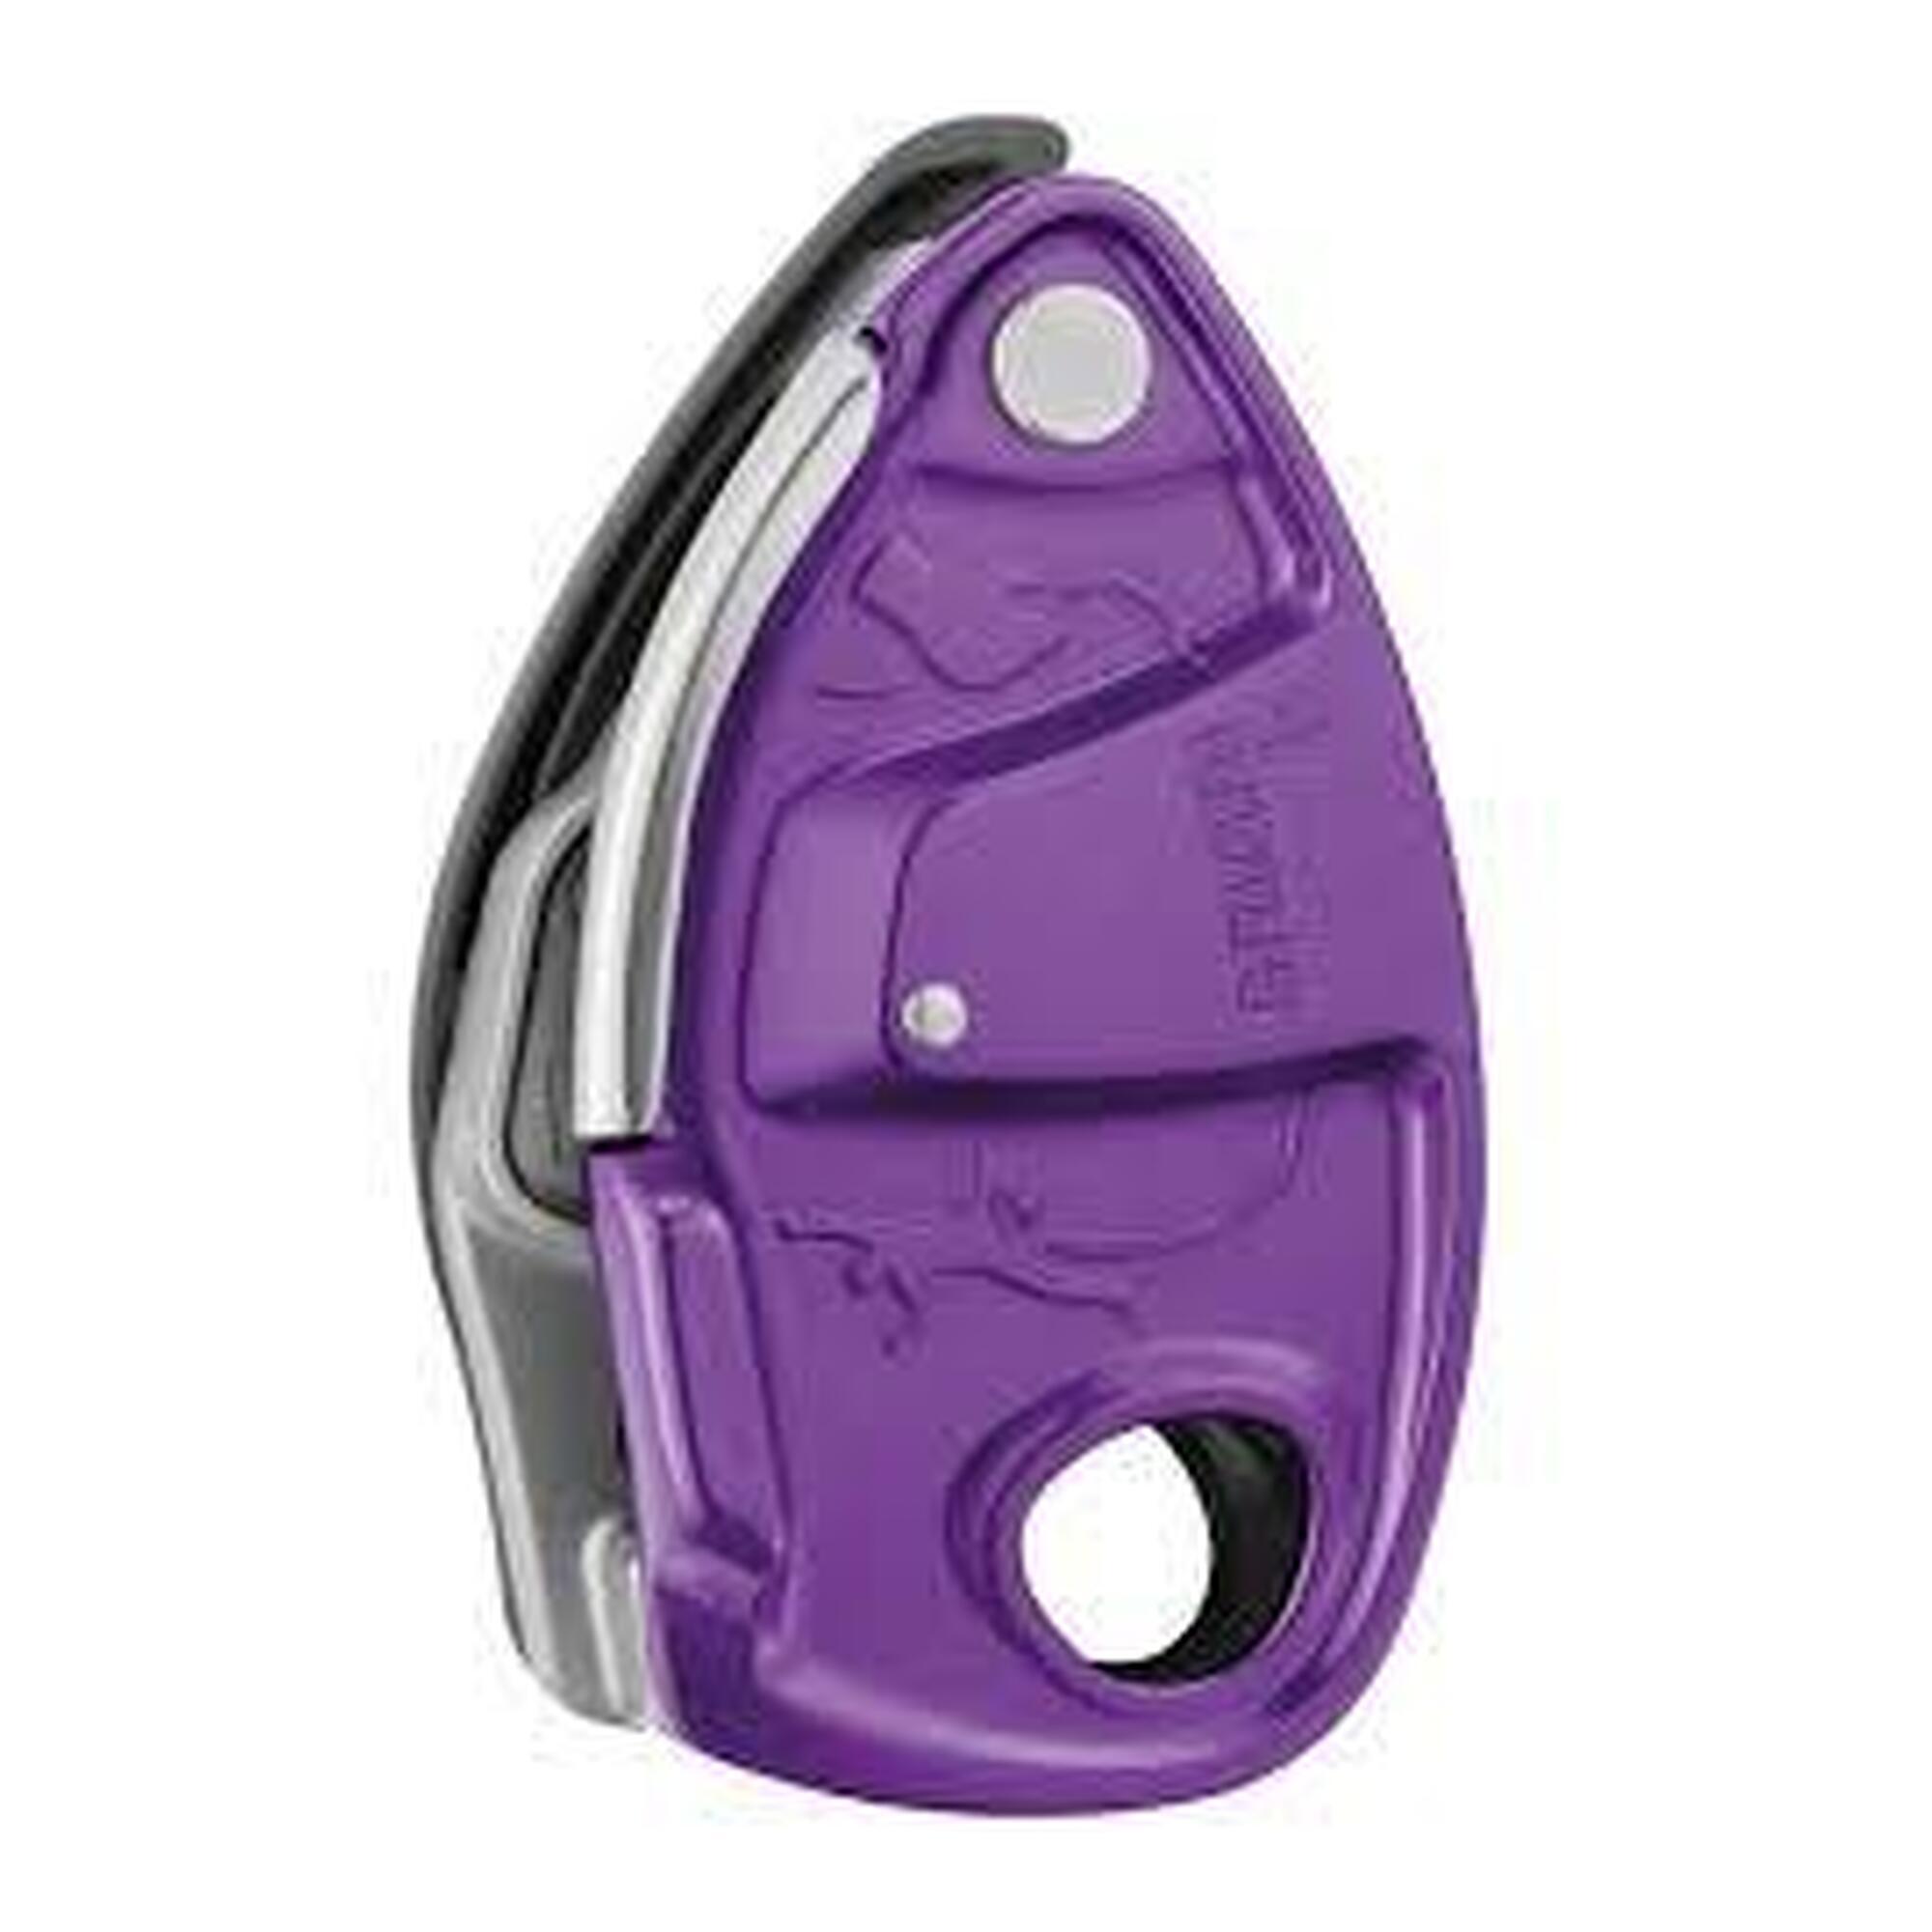 GriGri Plus 攀爬保護裝置 - 紫色